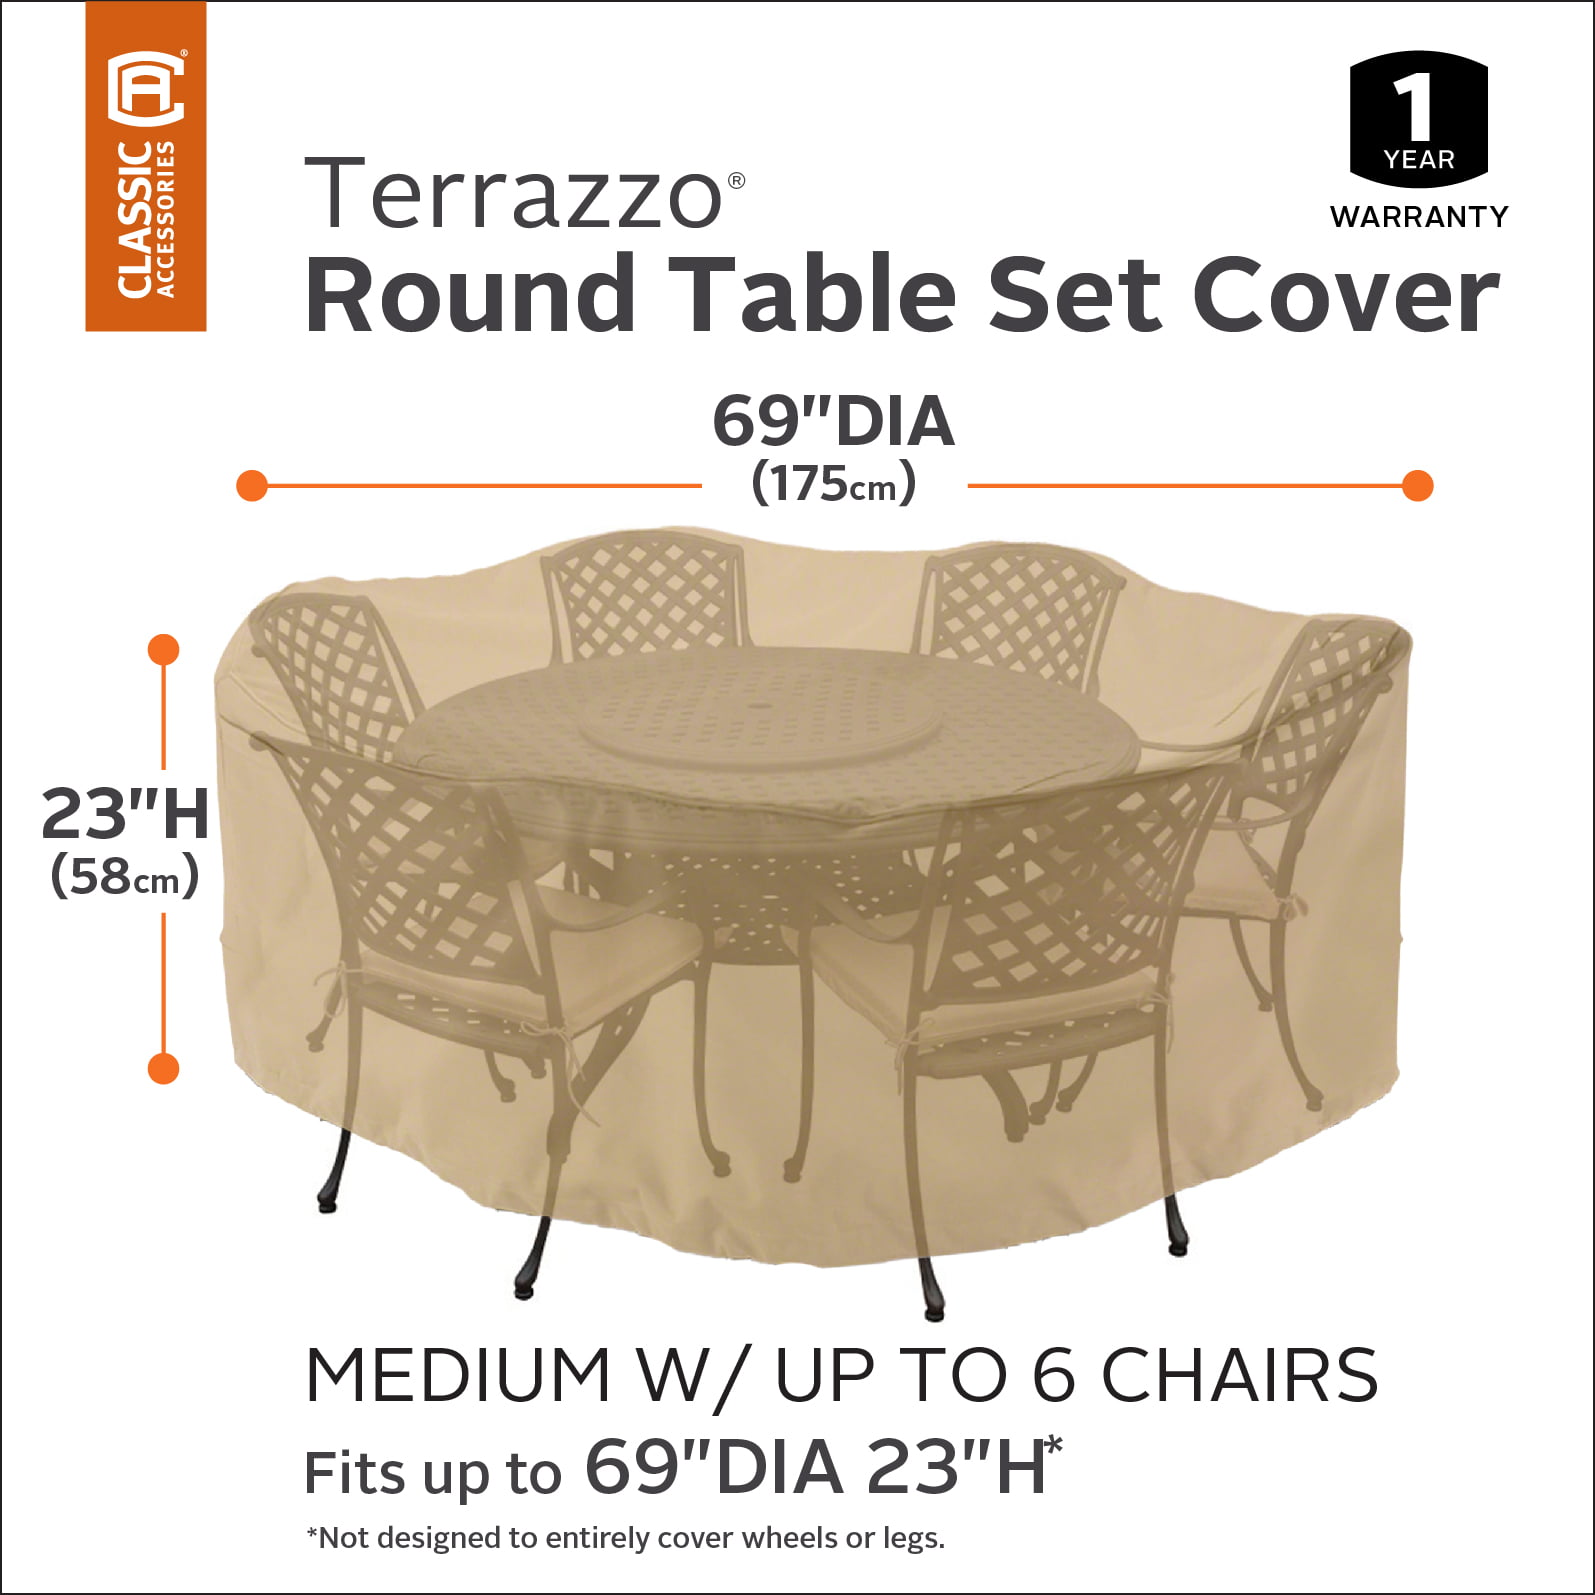 TrueShade Plus  Rectangular Table and Chair Set Cover-Medium